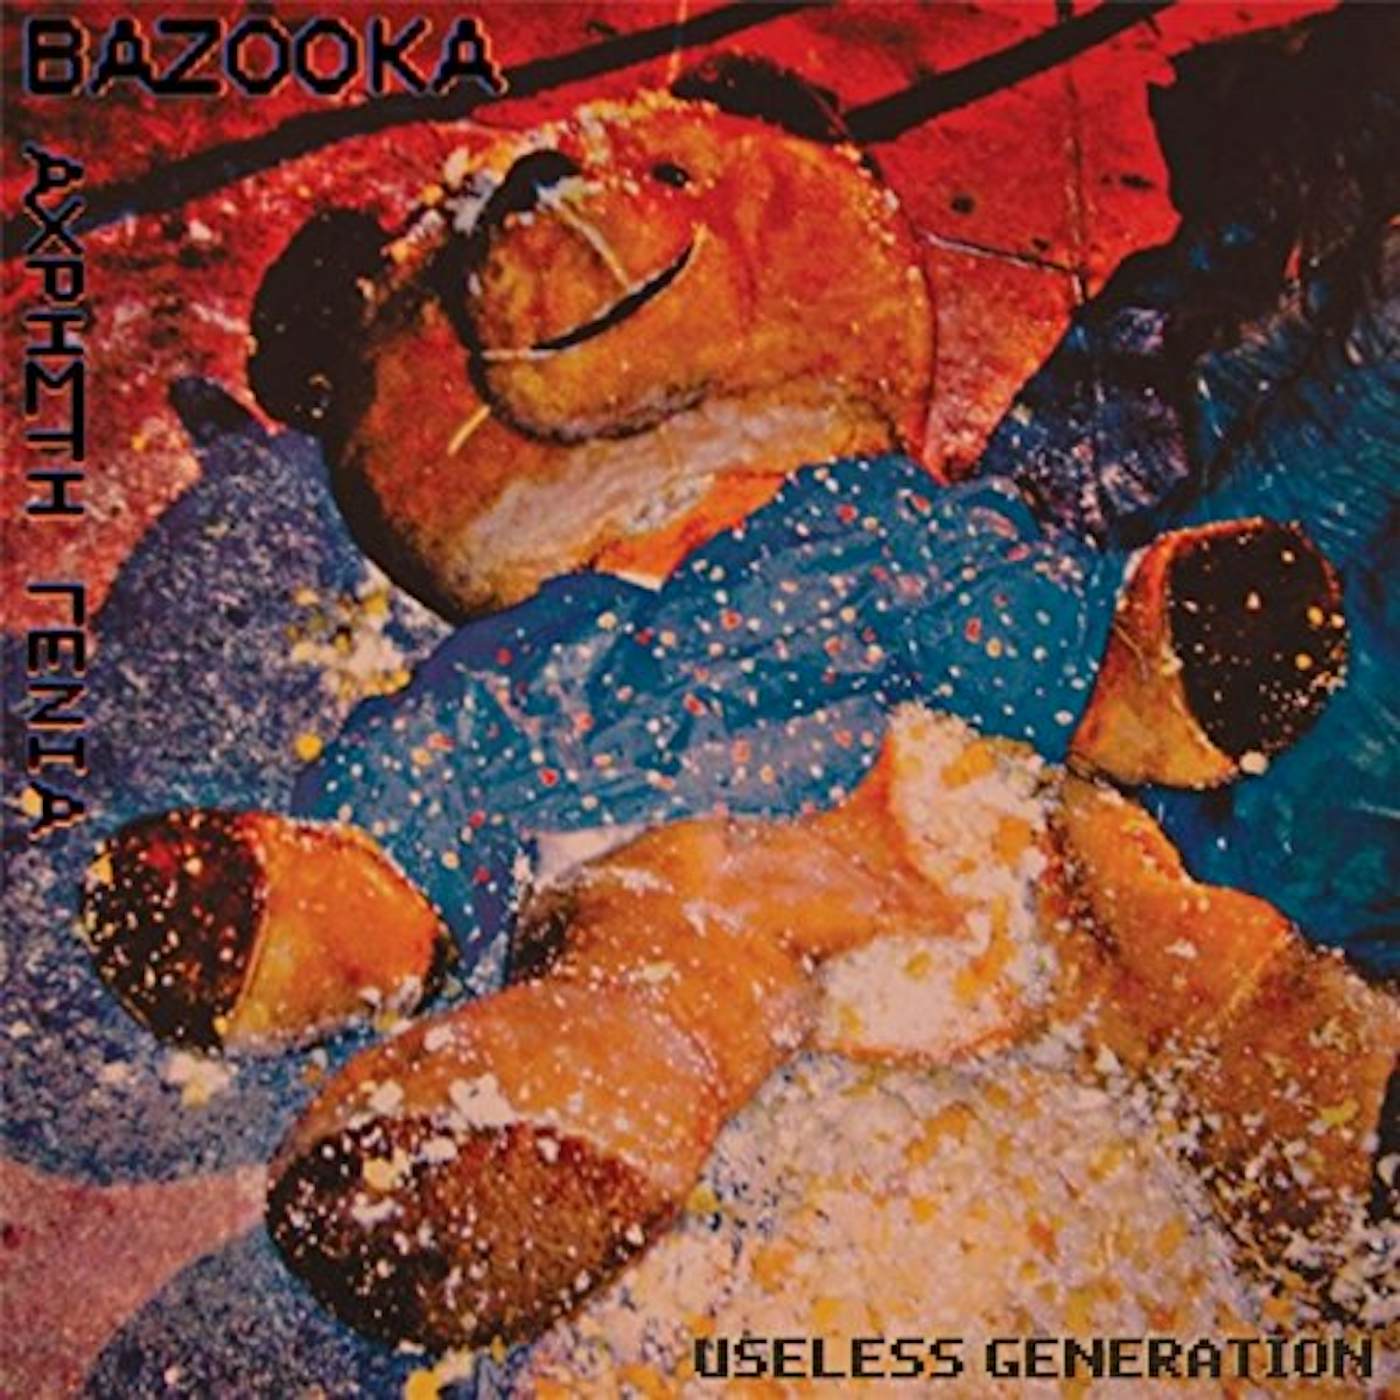 Bazooka USELESS GENERATION (ACHRISTI GENIA) CD